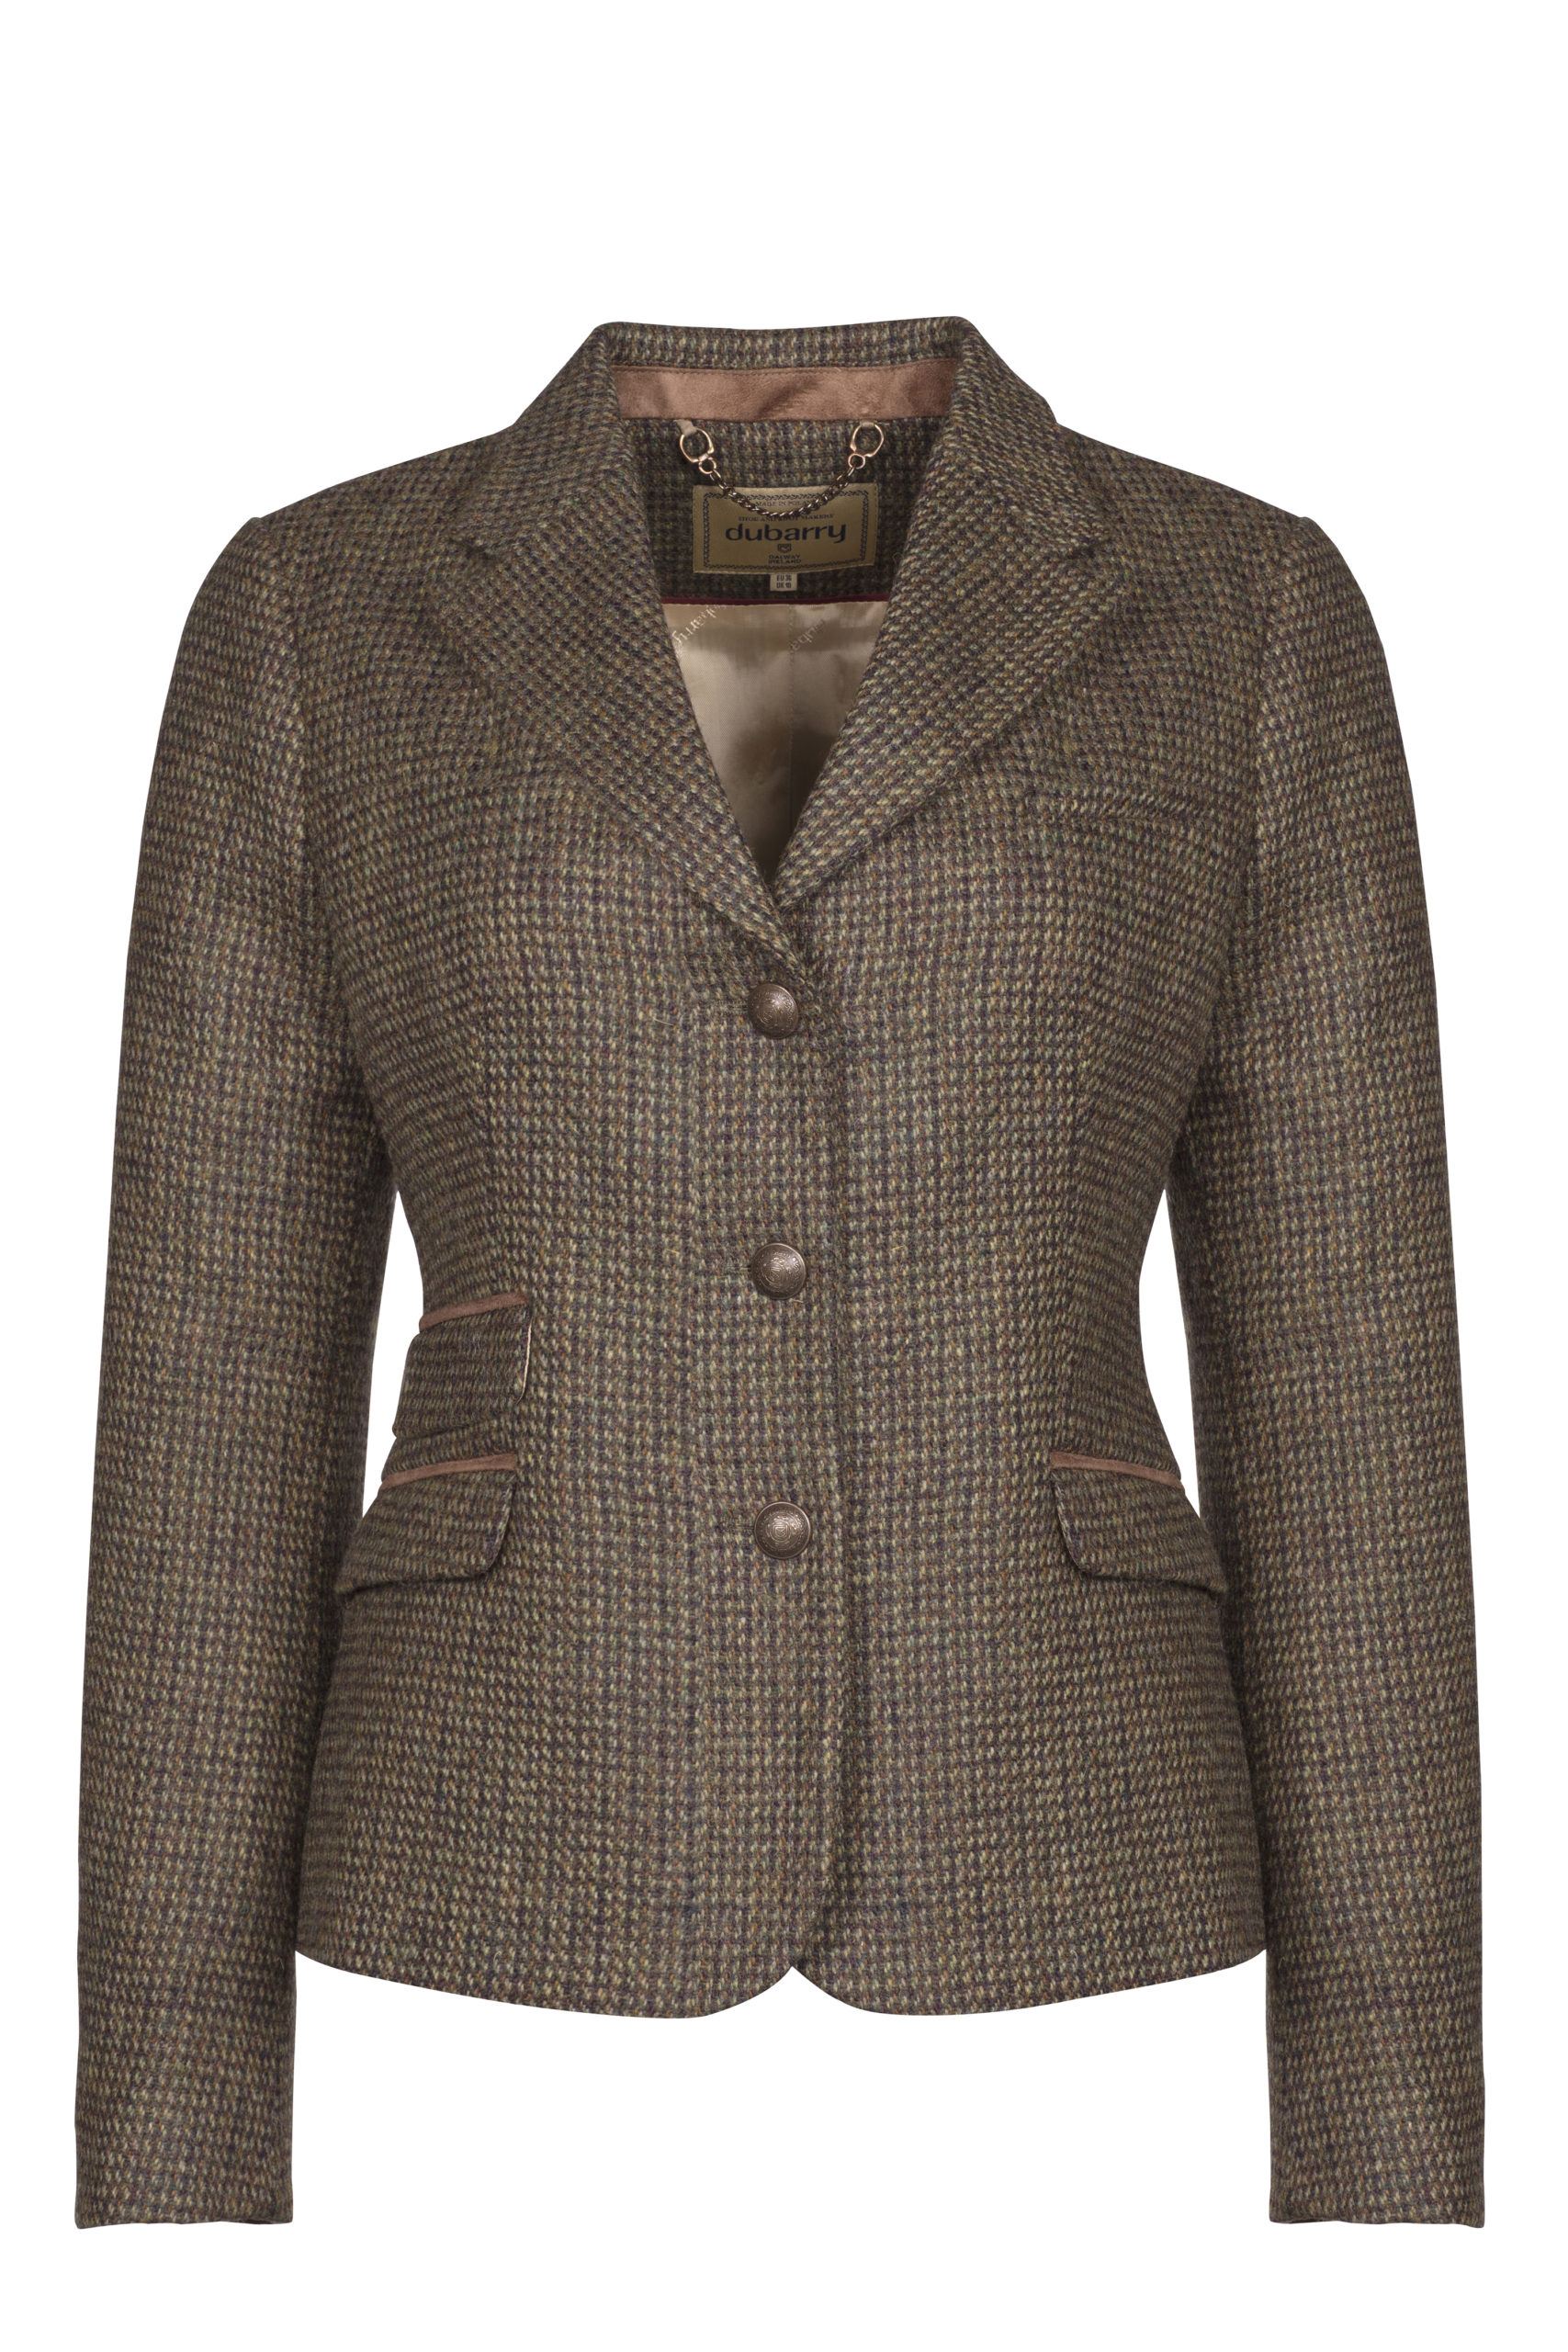 Dubarry Buttercup Short Tweed jacket - Welsh Farmhouse Company